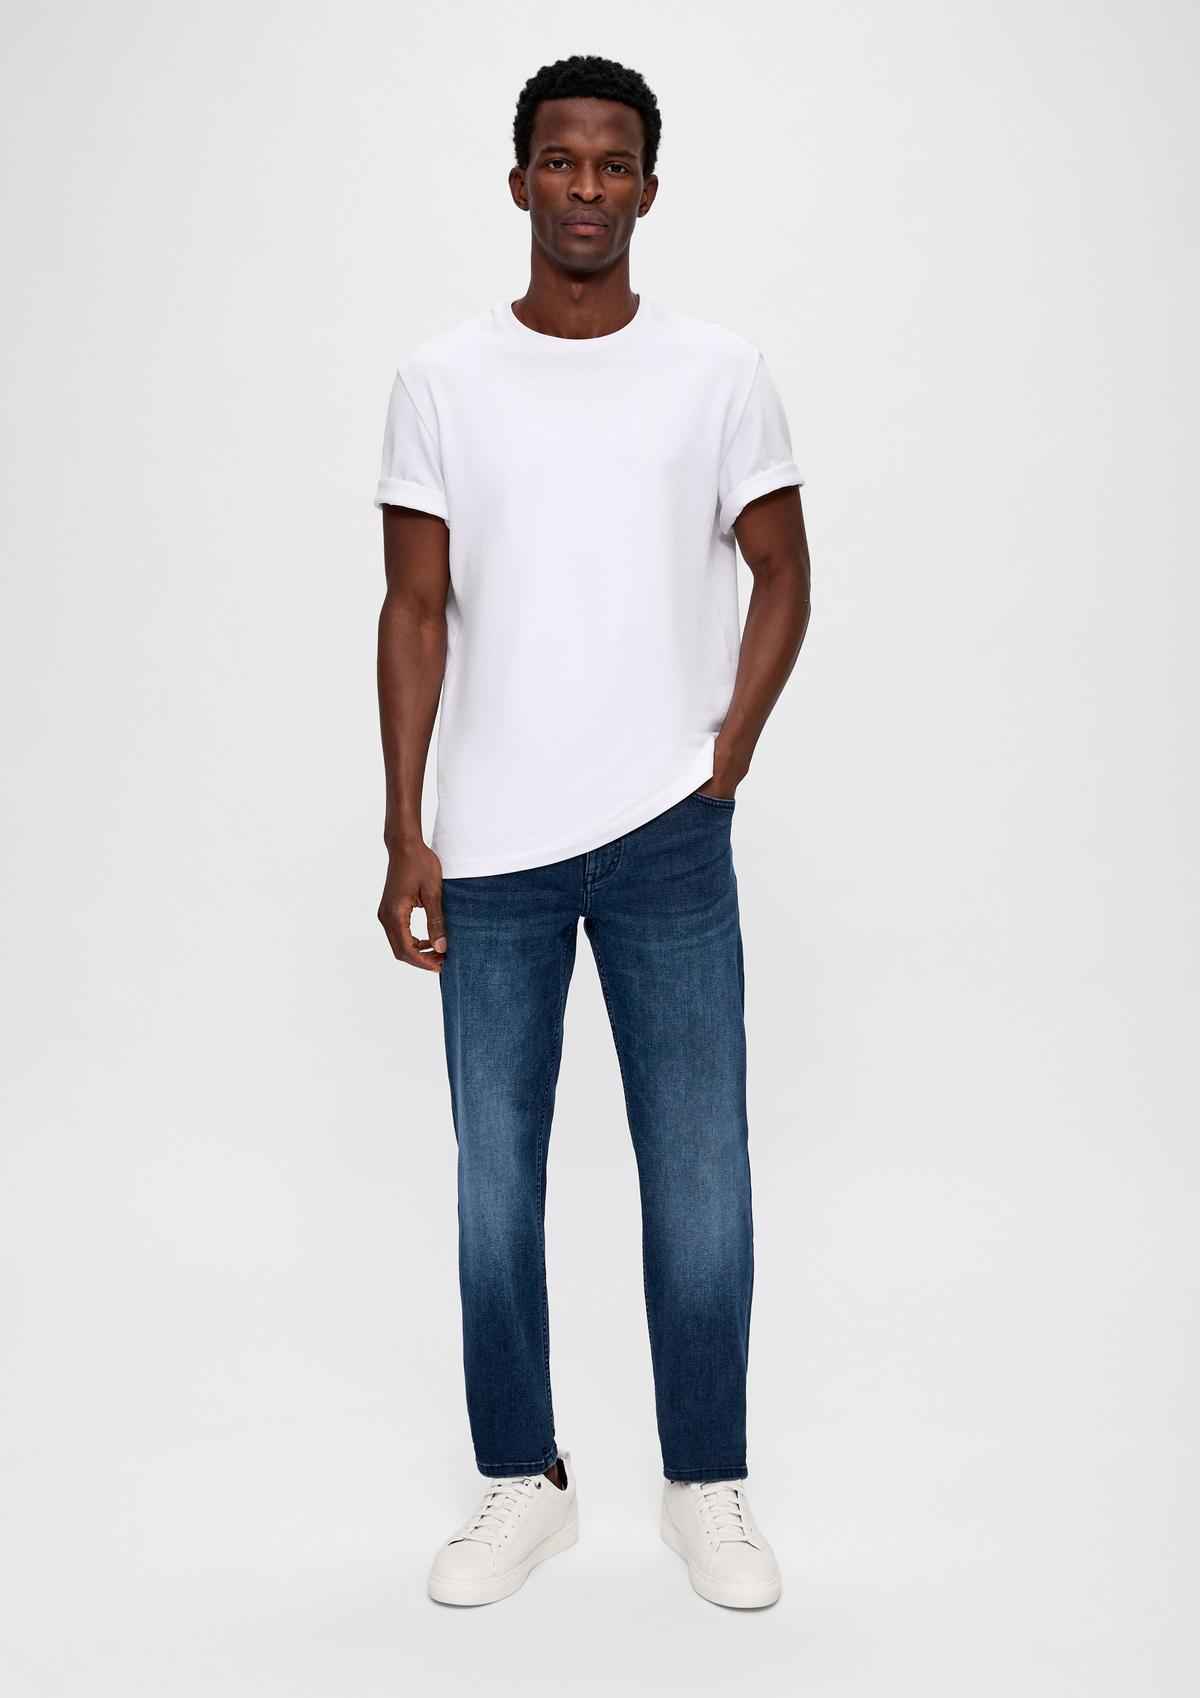 s.Oliver Jeans Nelio / slim fit / mid rise / slim leg / garment wash